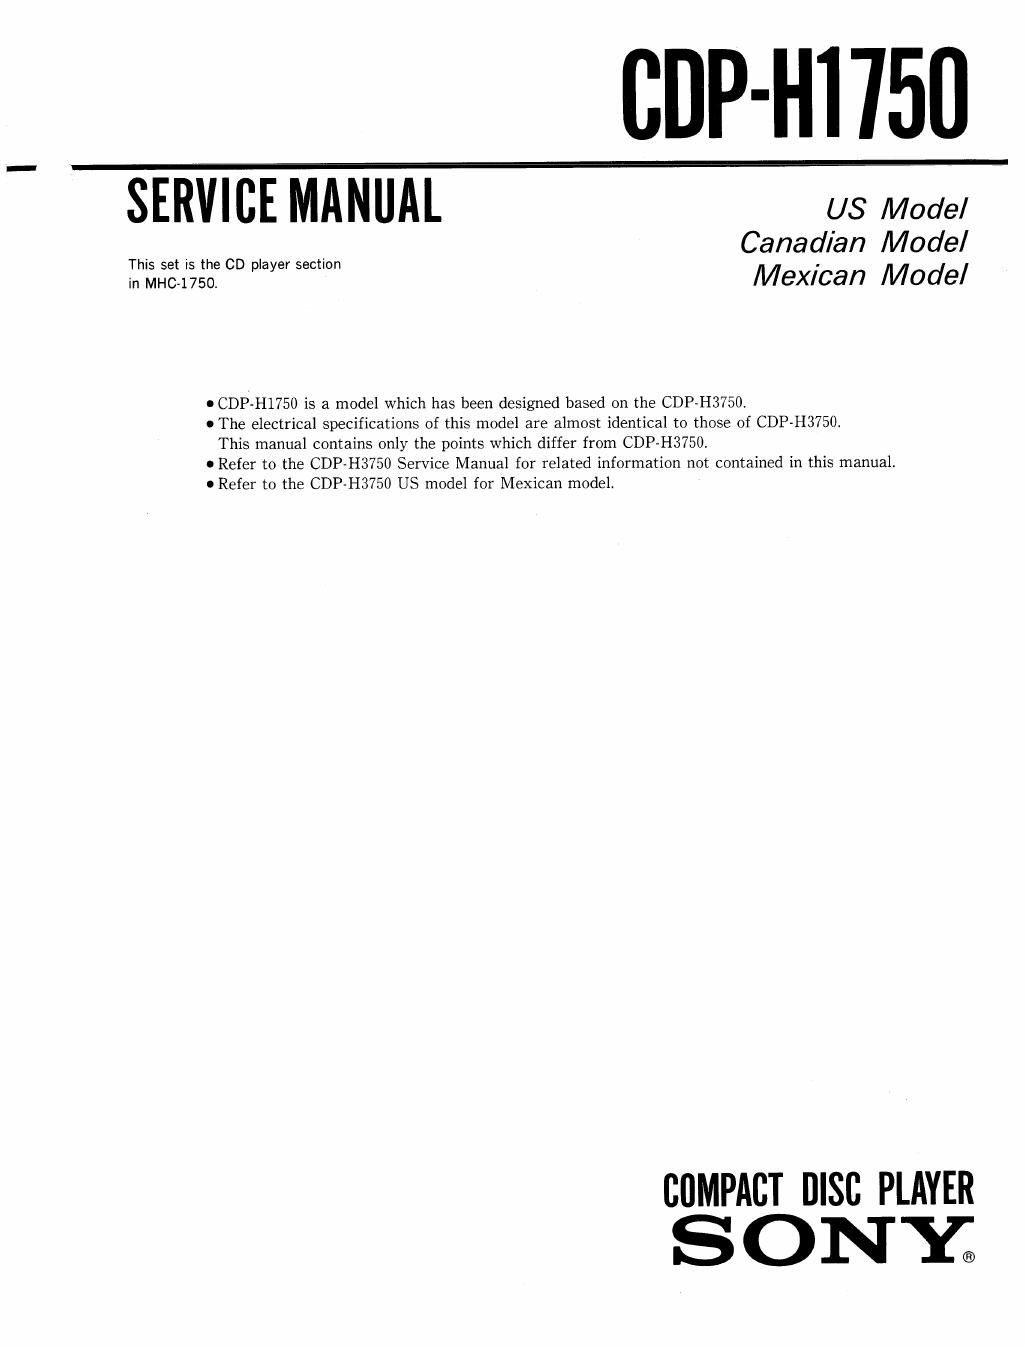 sony cdp h 1750 service manual